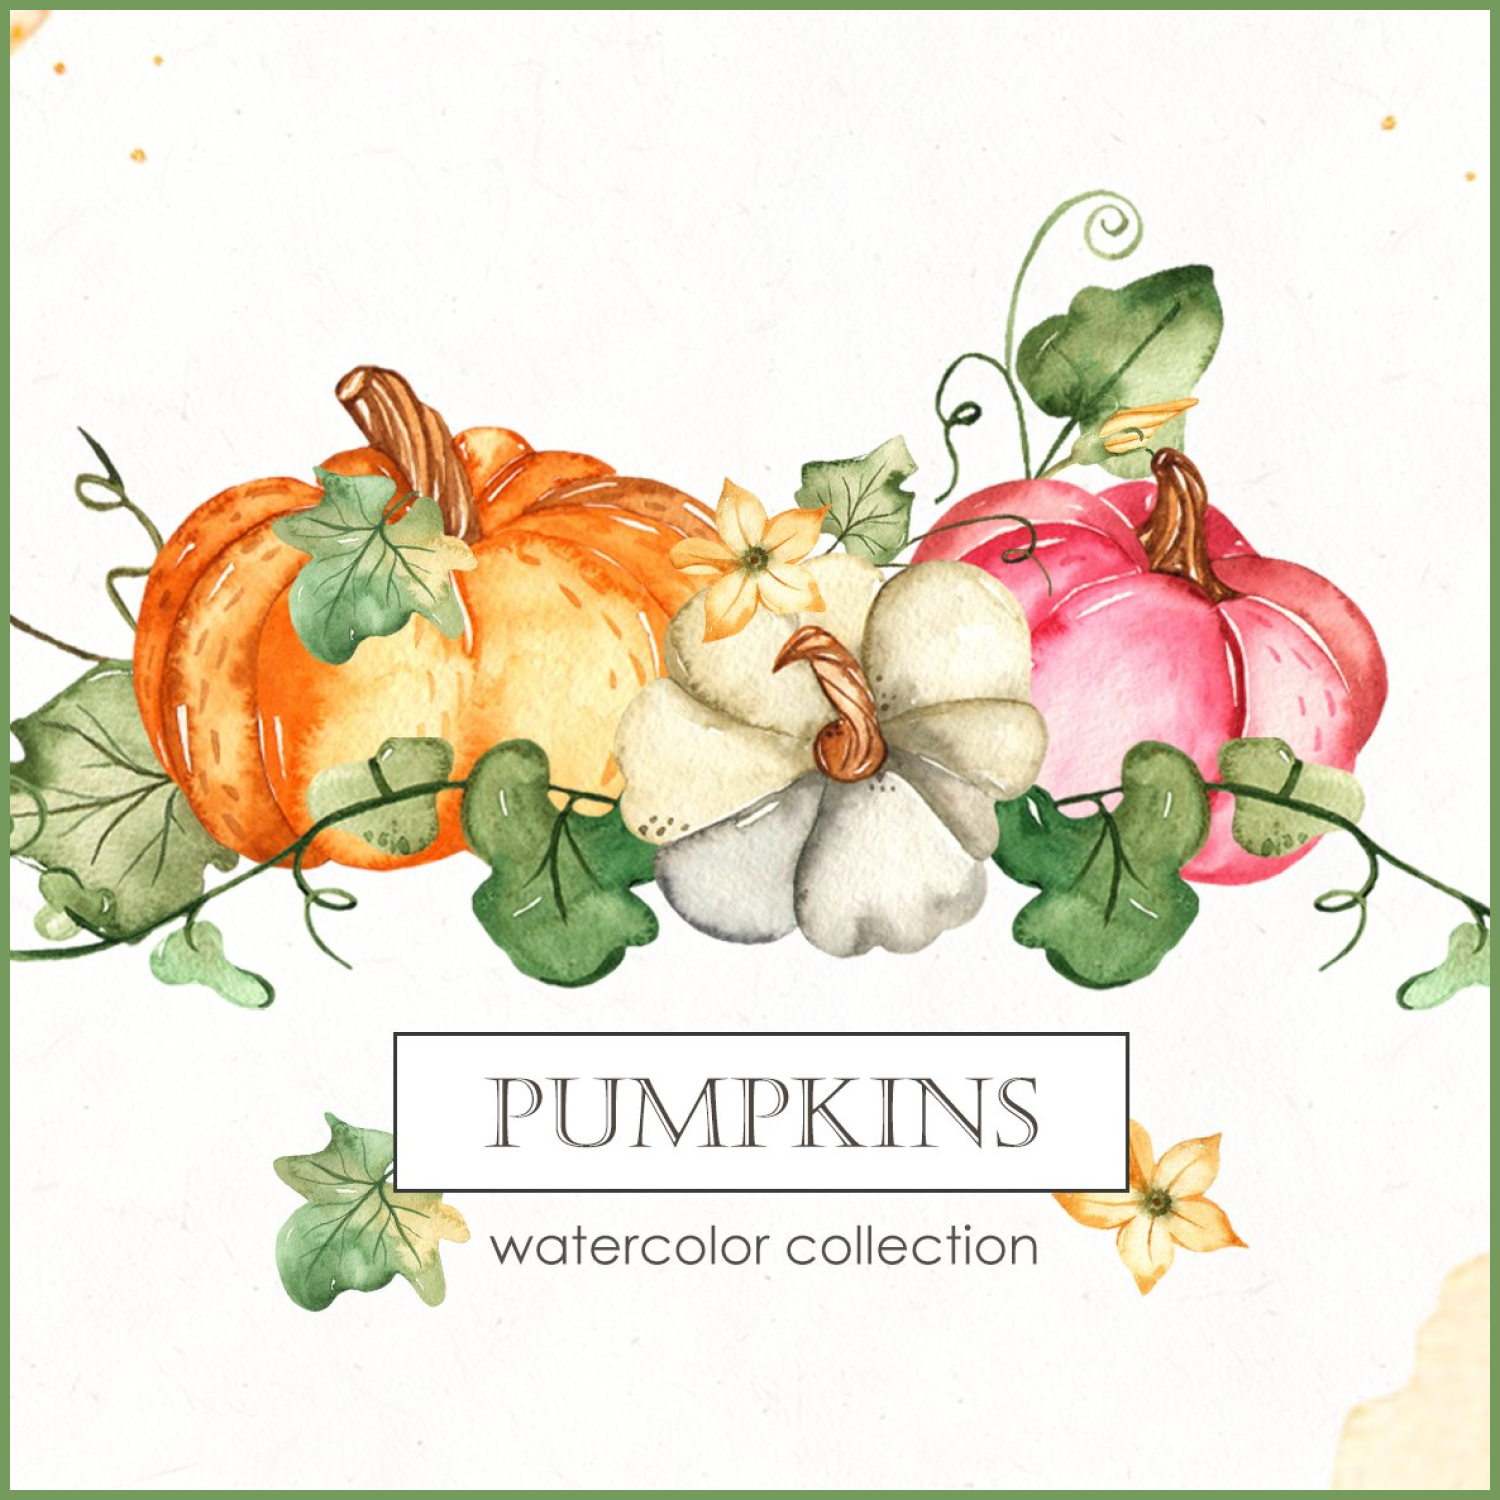 Preview pumpkins watercolor collection.